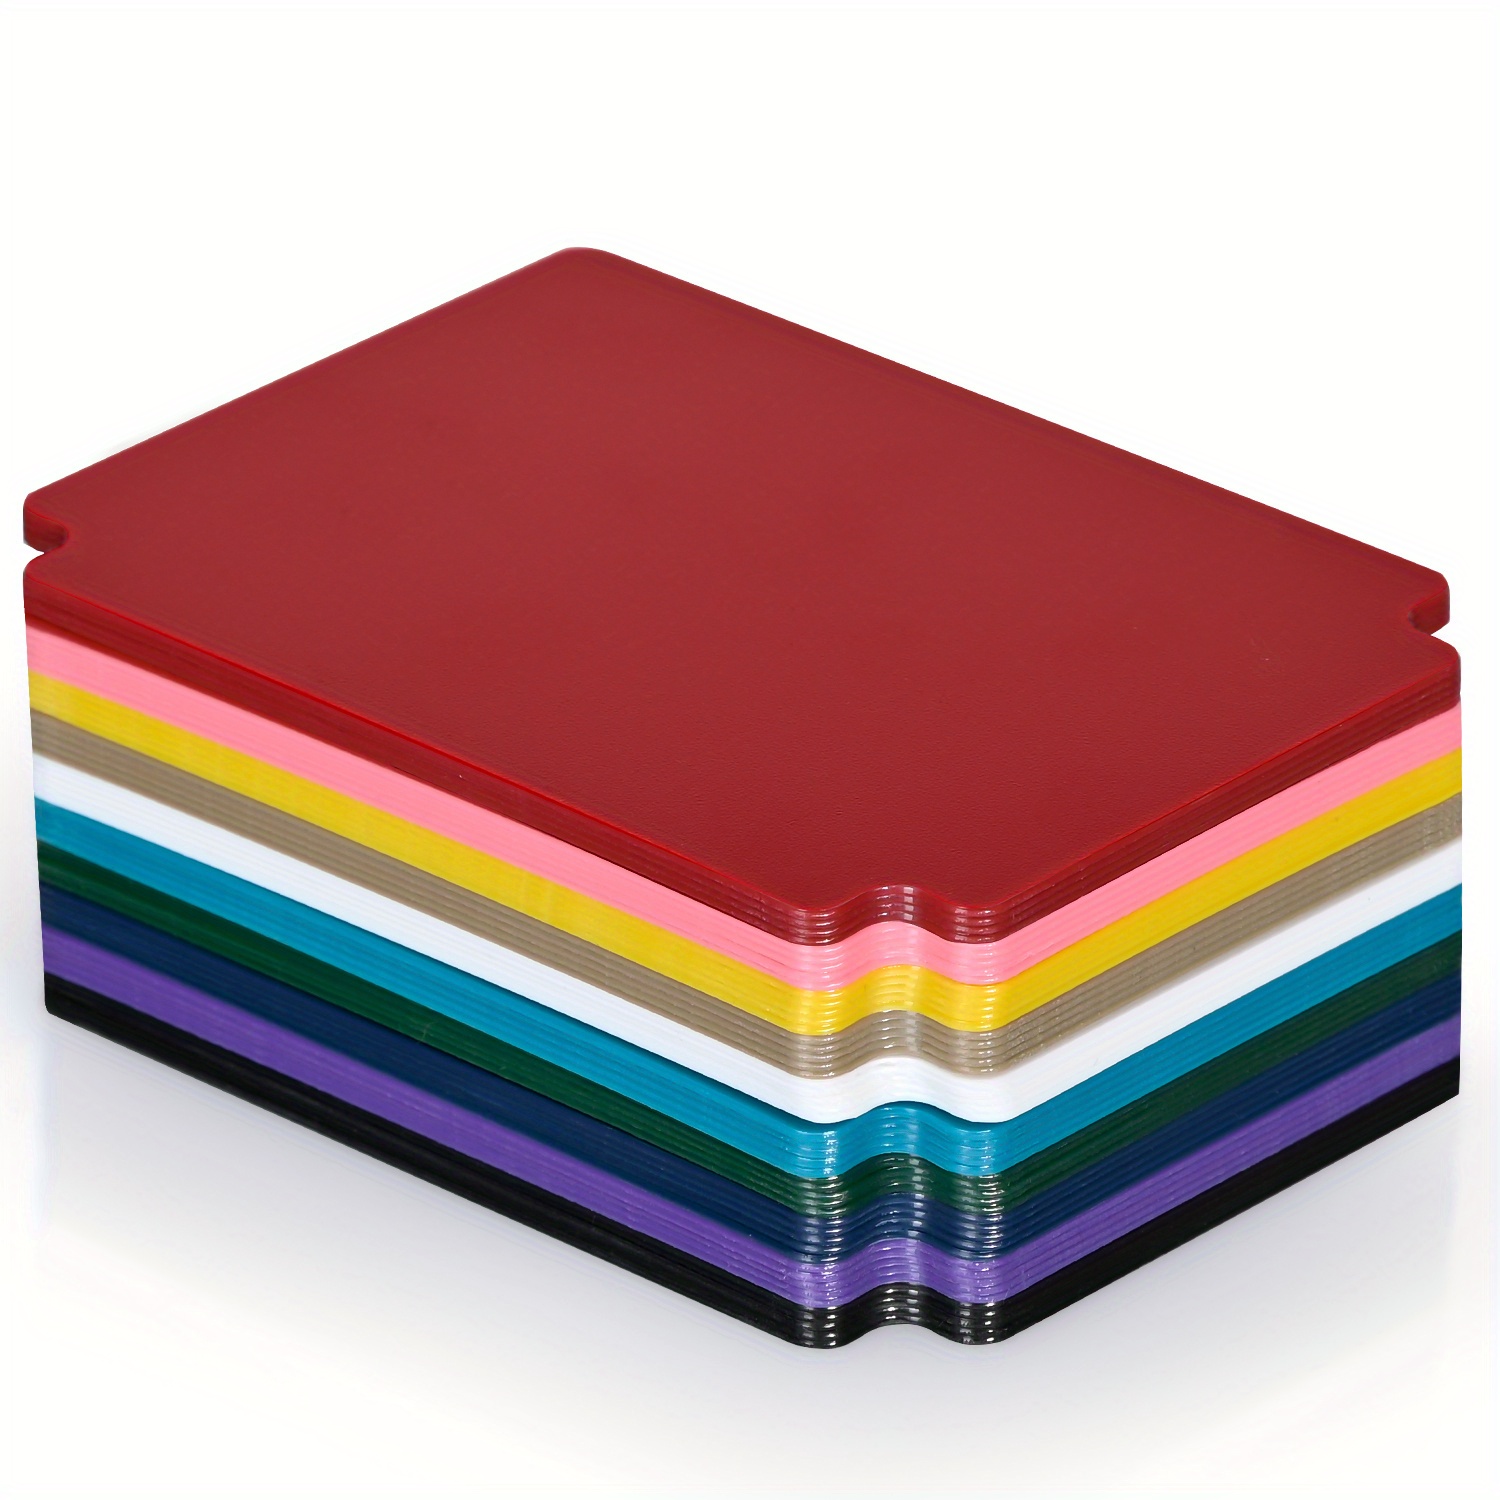 Multicolor Recipe Card Dividers Set of 24 - Includes UK